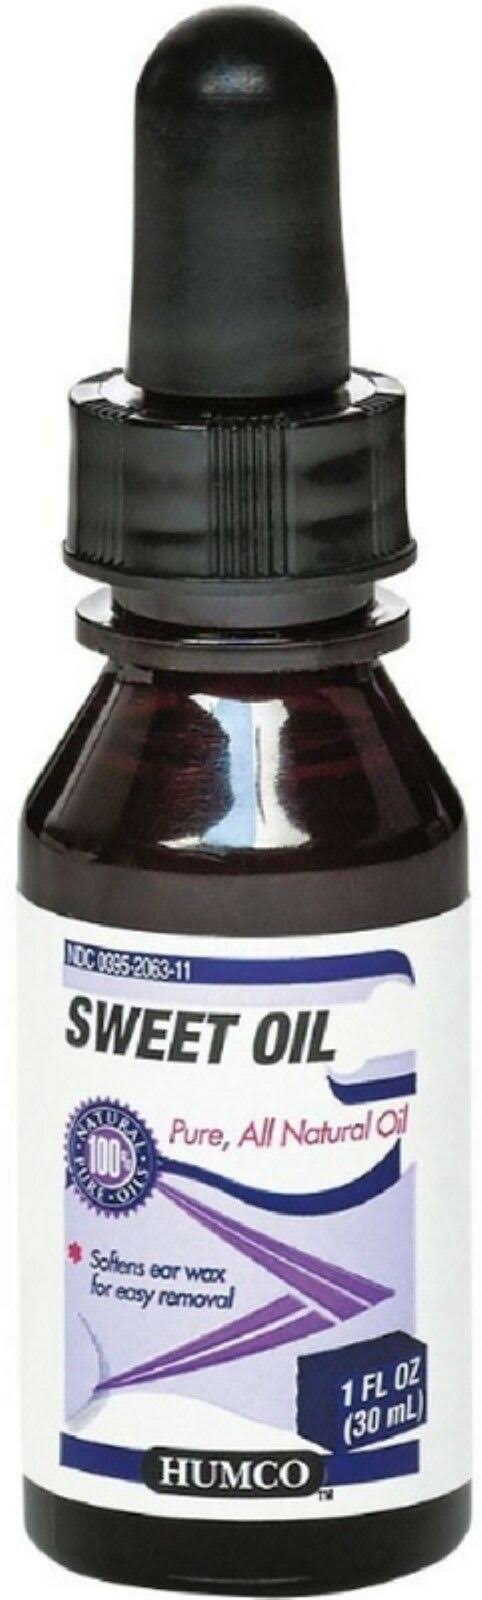 Humco 100% Natural Sweet Oil - 1 oz